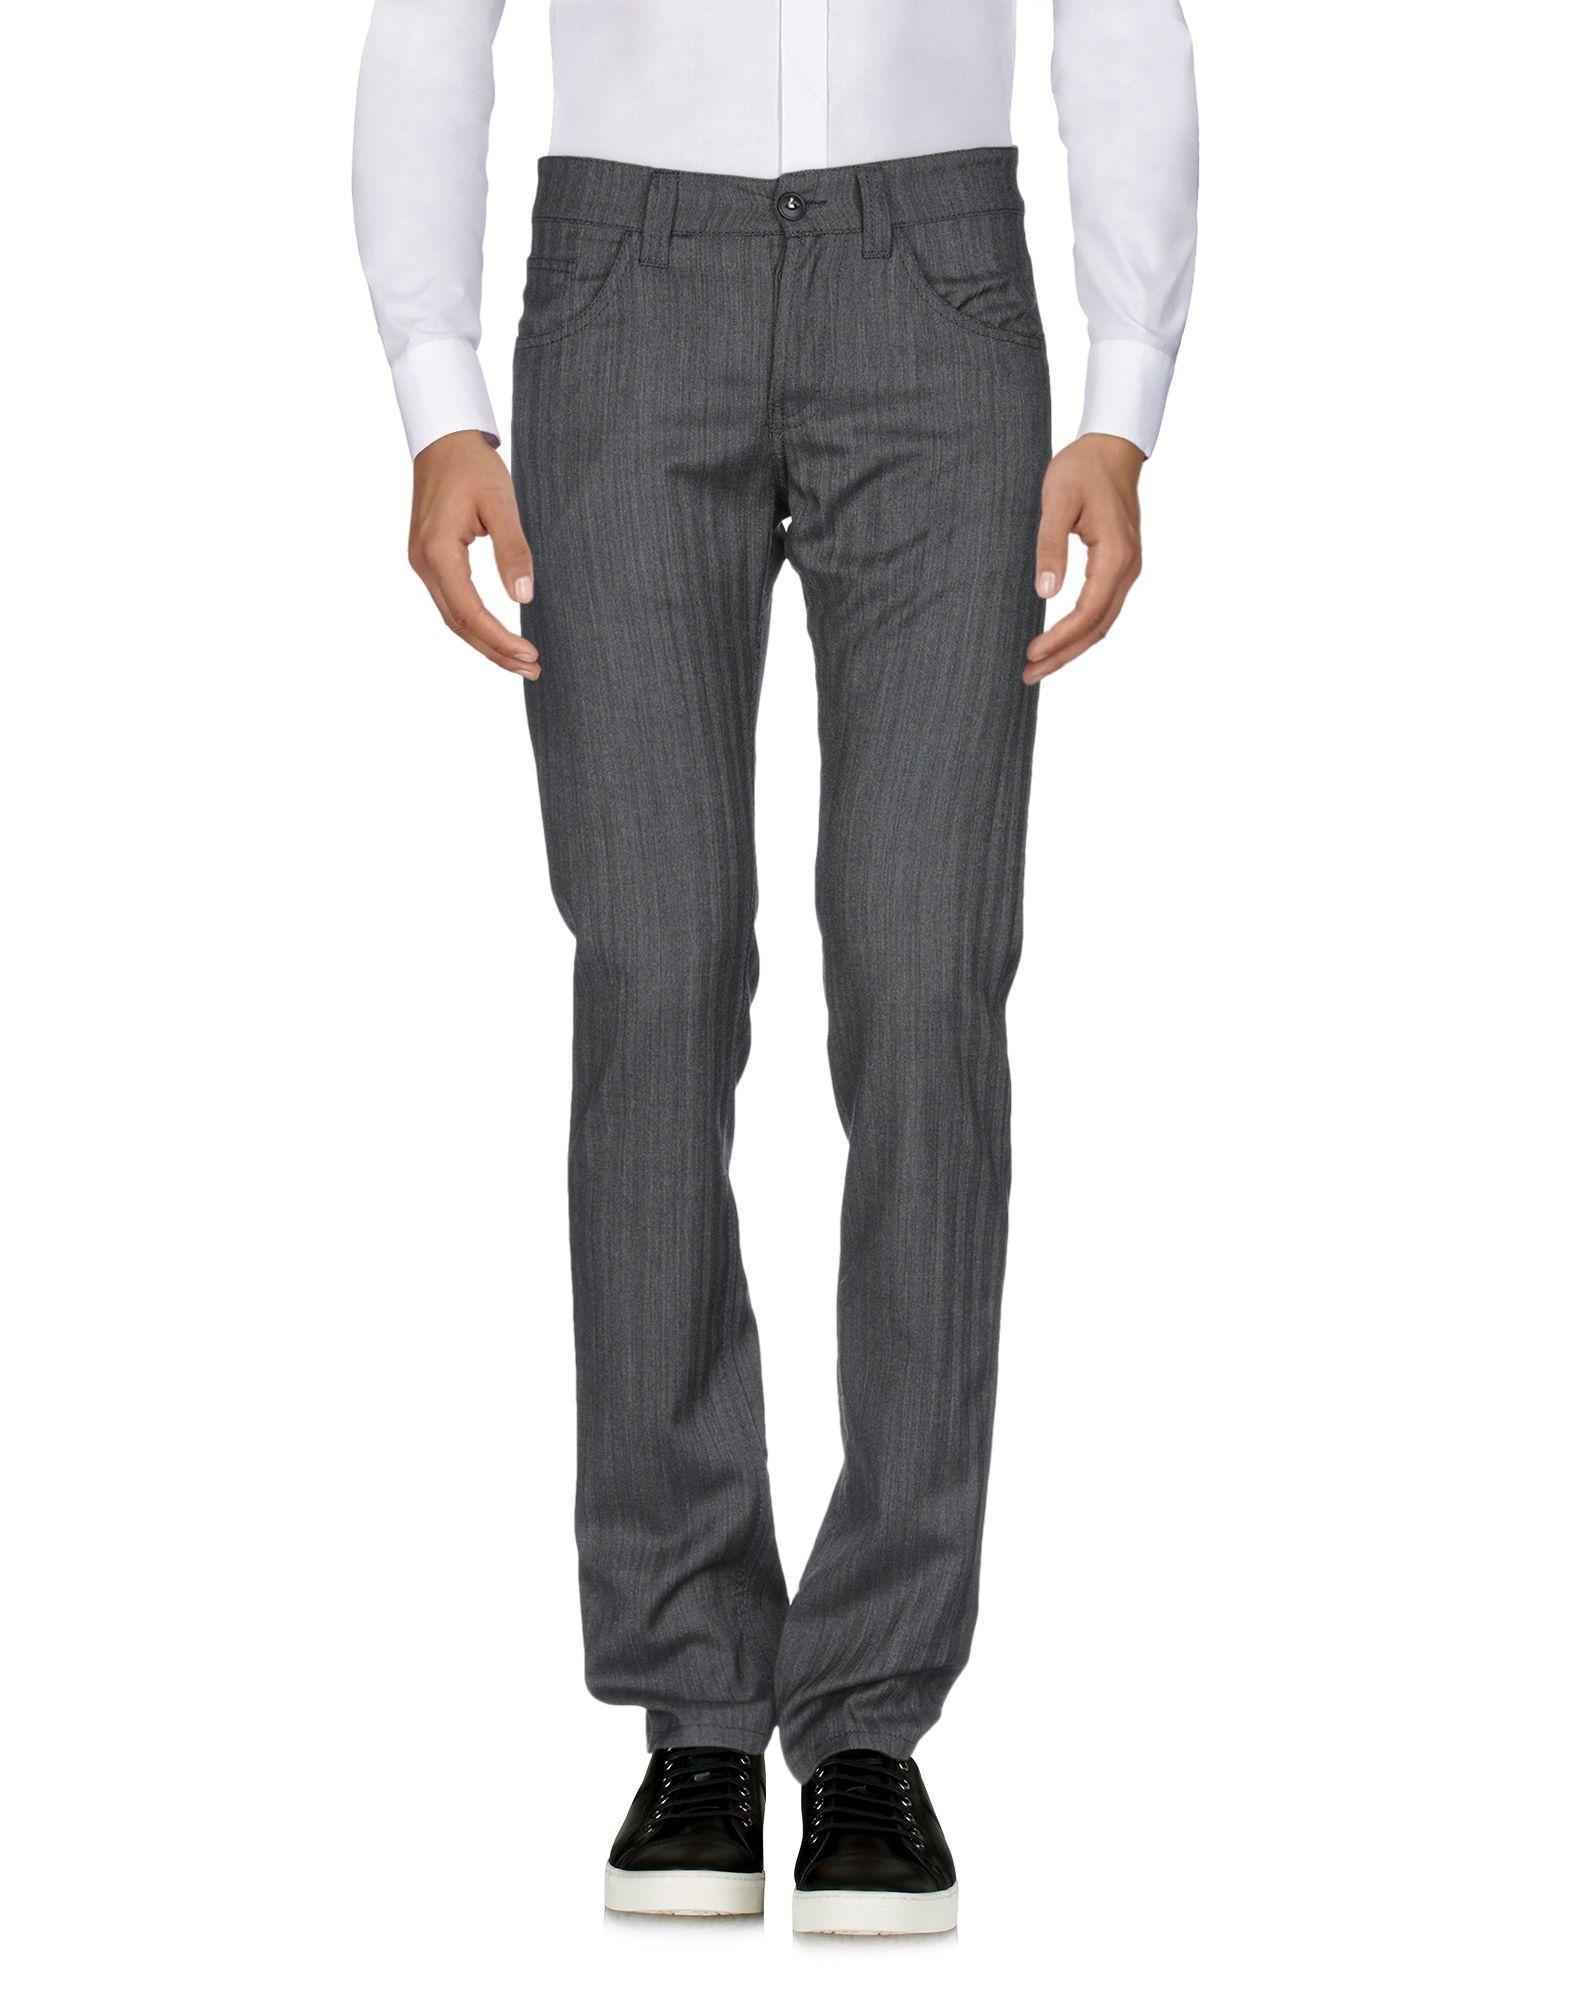 Dondup Wool Casual Pants in Steel Grey (Gray) for Men - Lyst